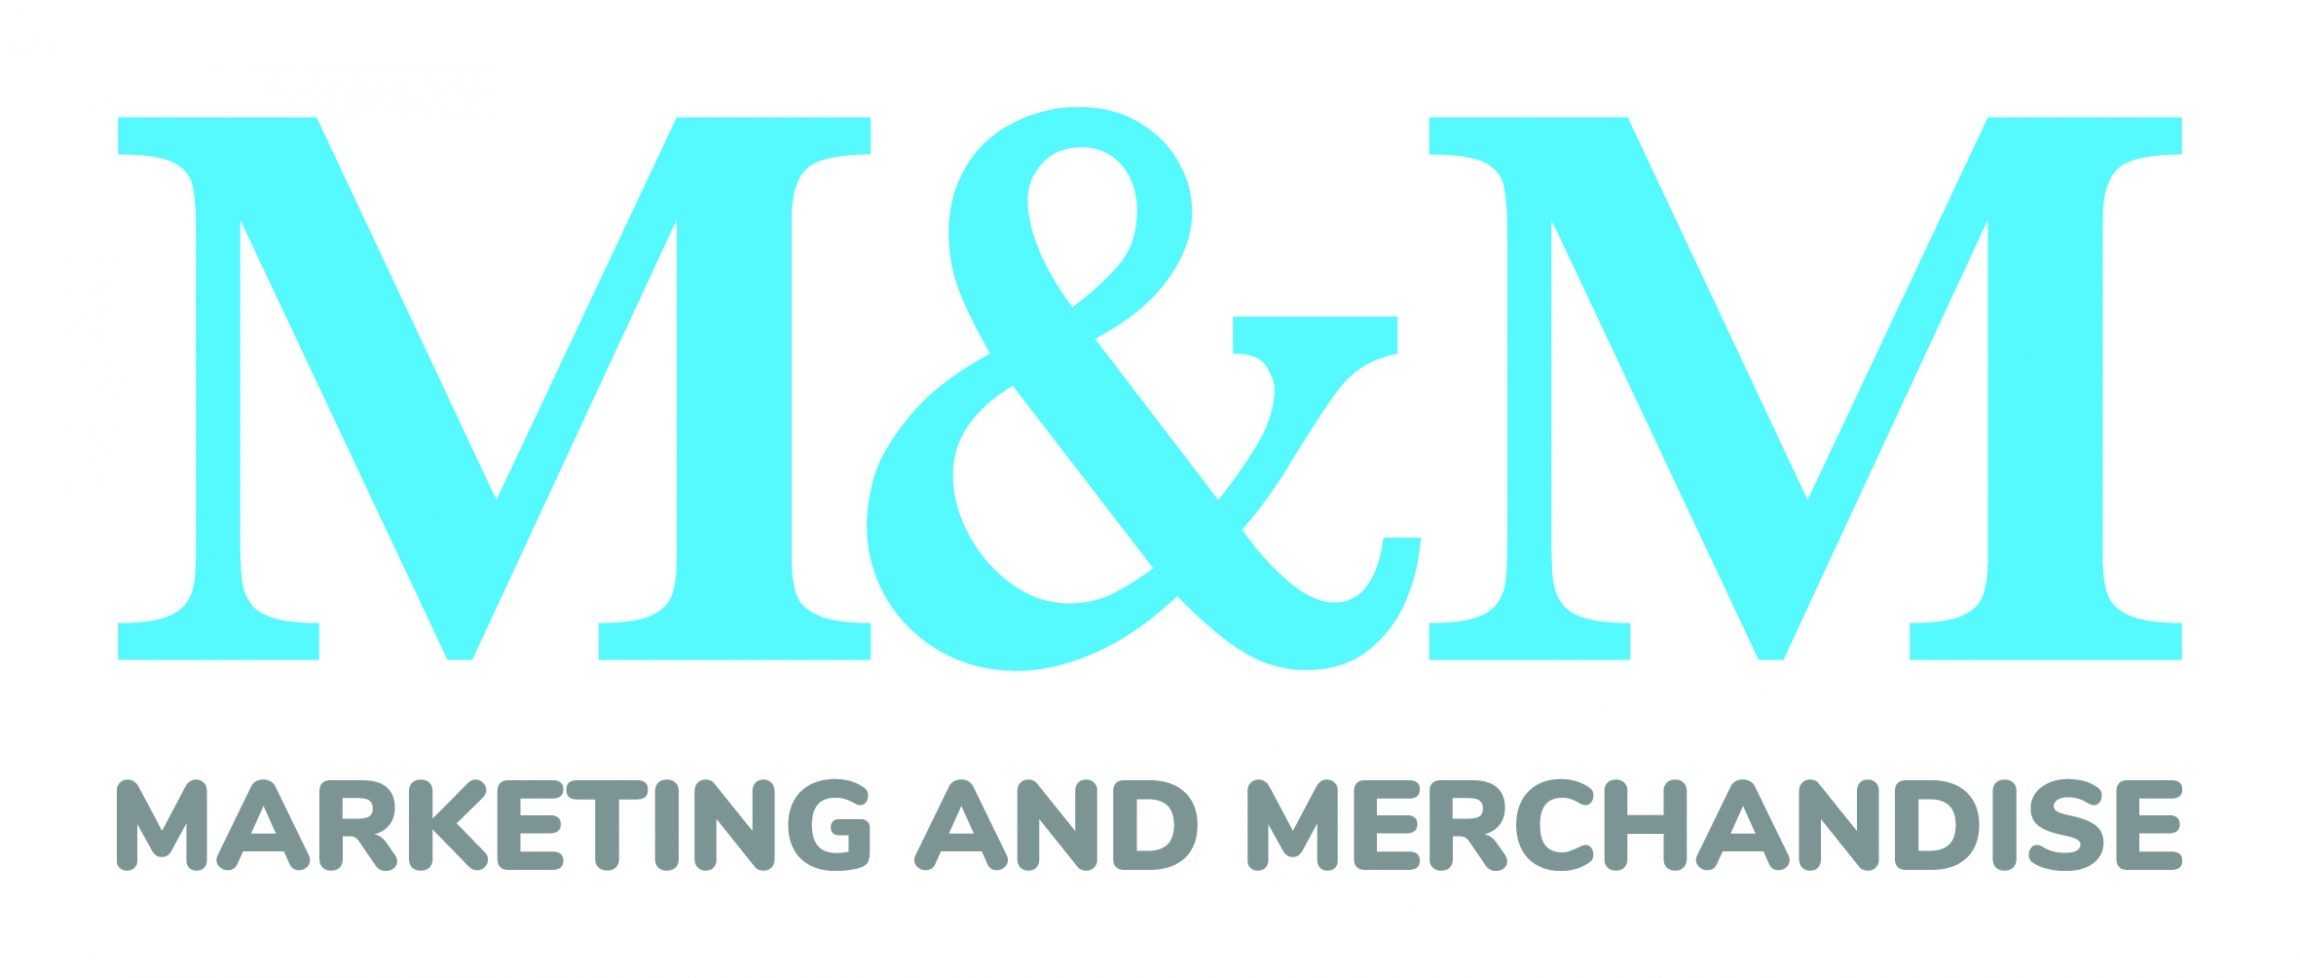 Marketing and Merchandise